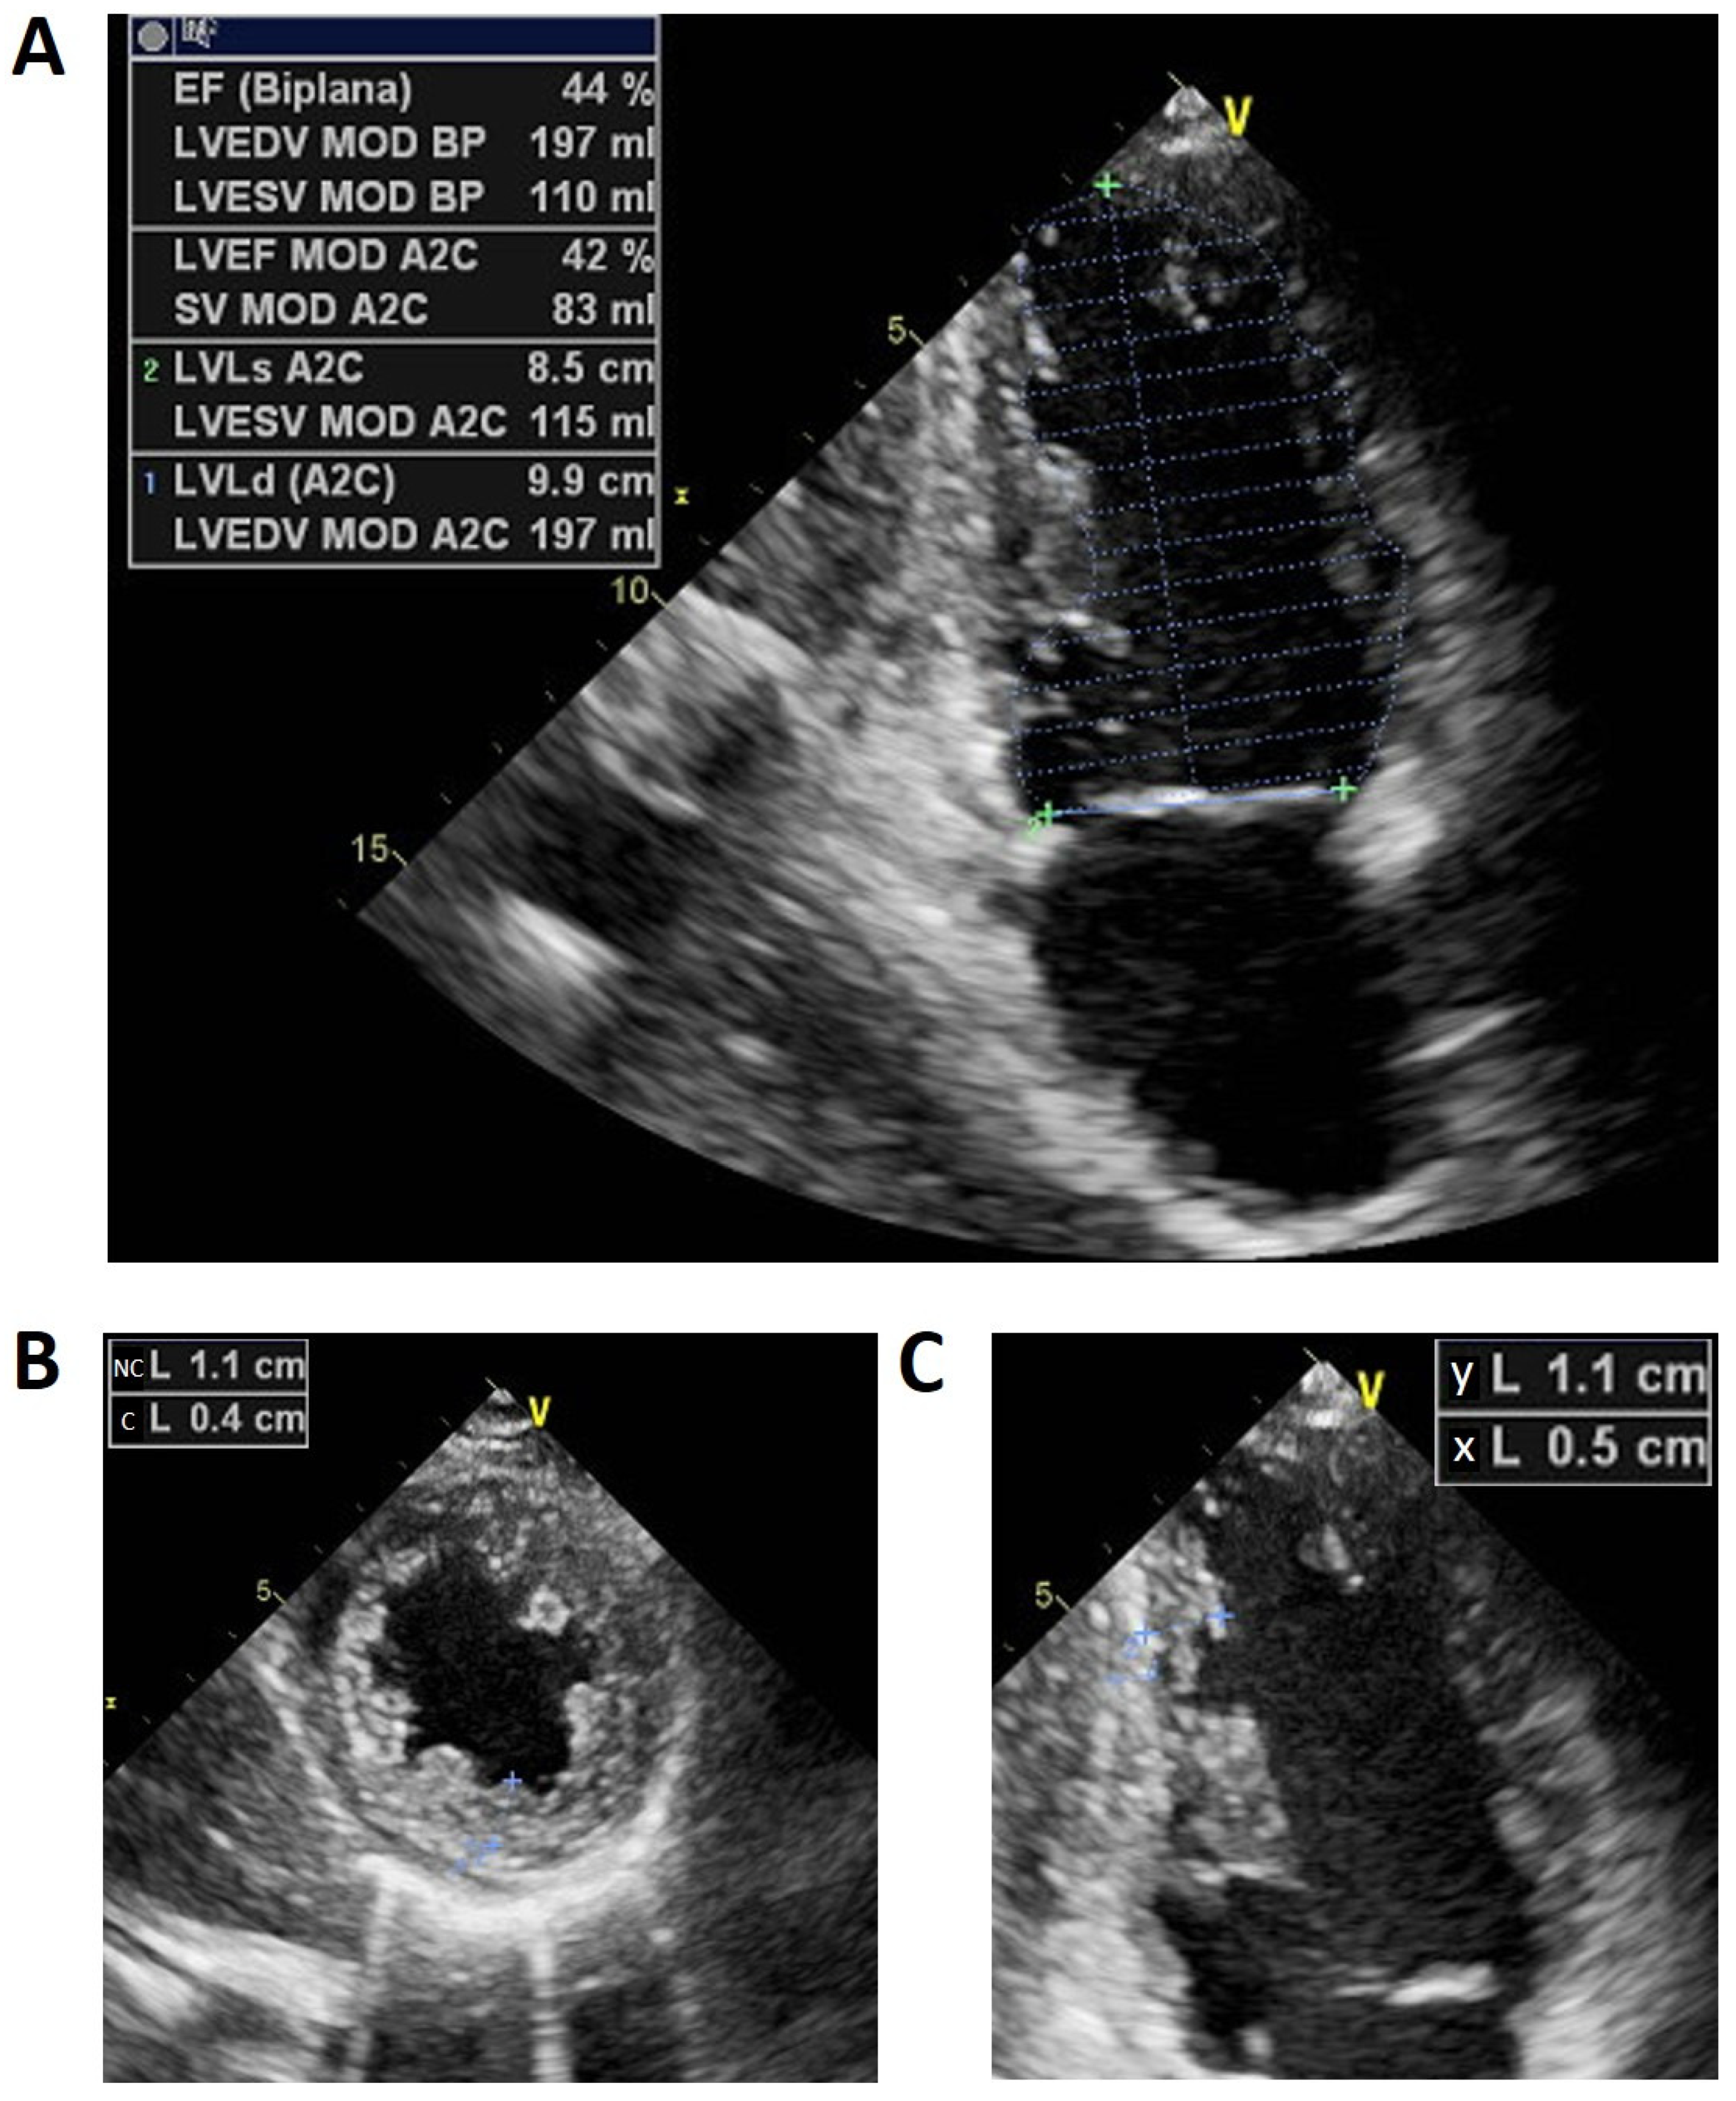 Basic Echocardiography in Dilated Cardiomyopathy